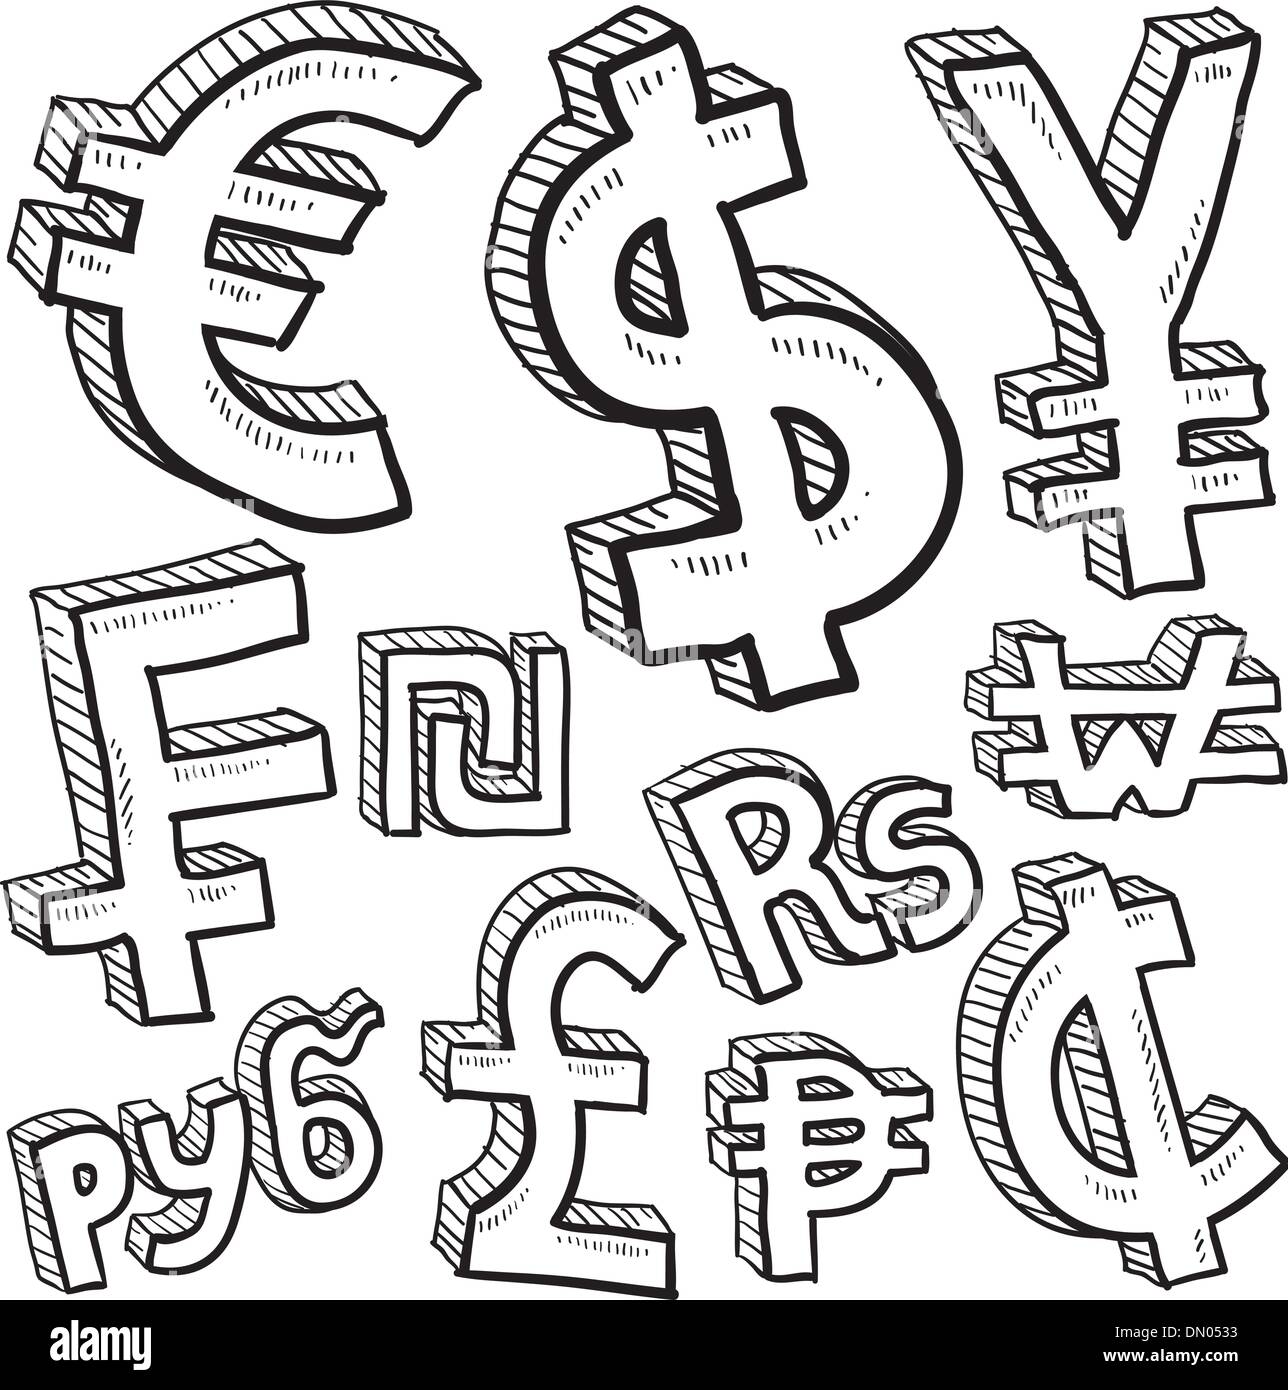 Currency symbols assortment vector sketch Stock Vector